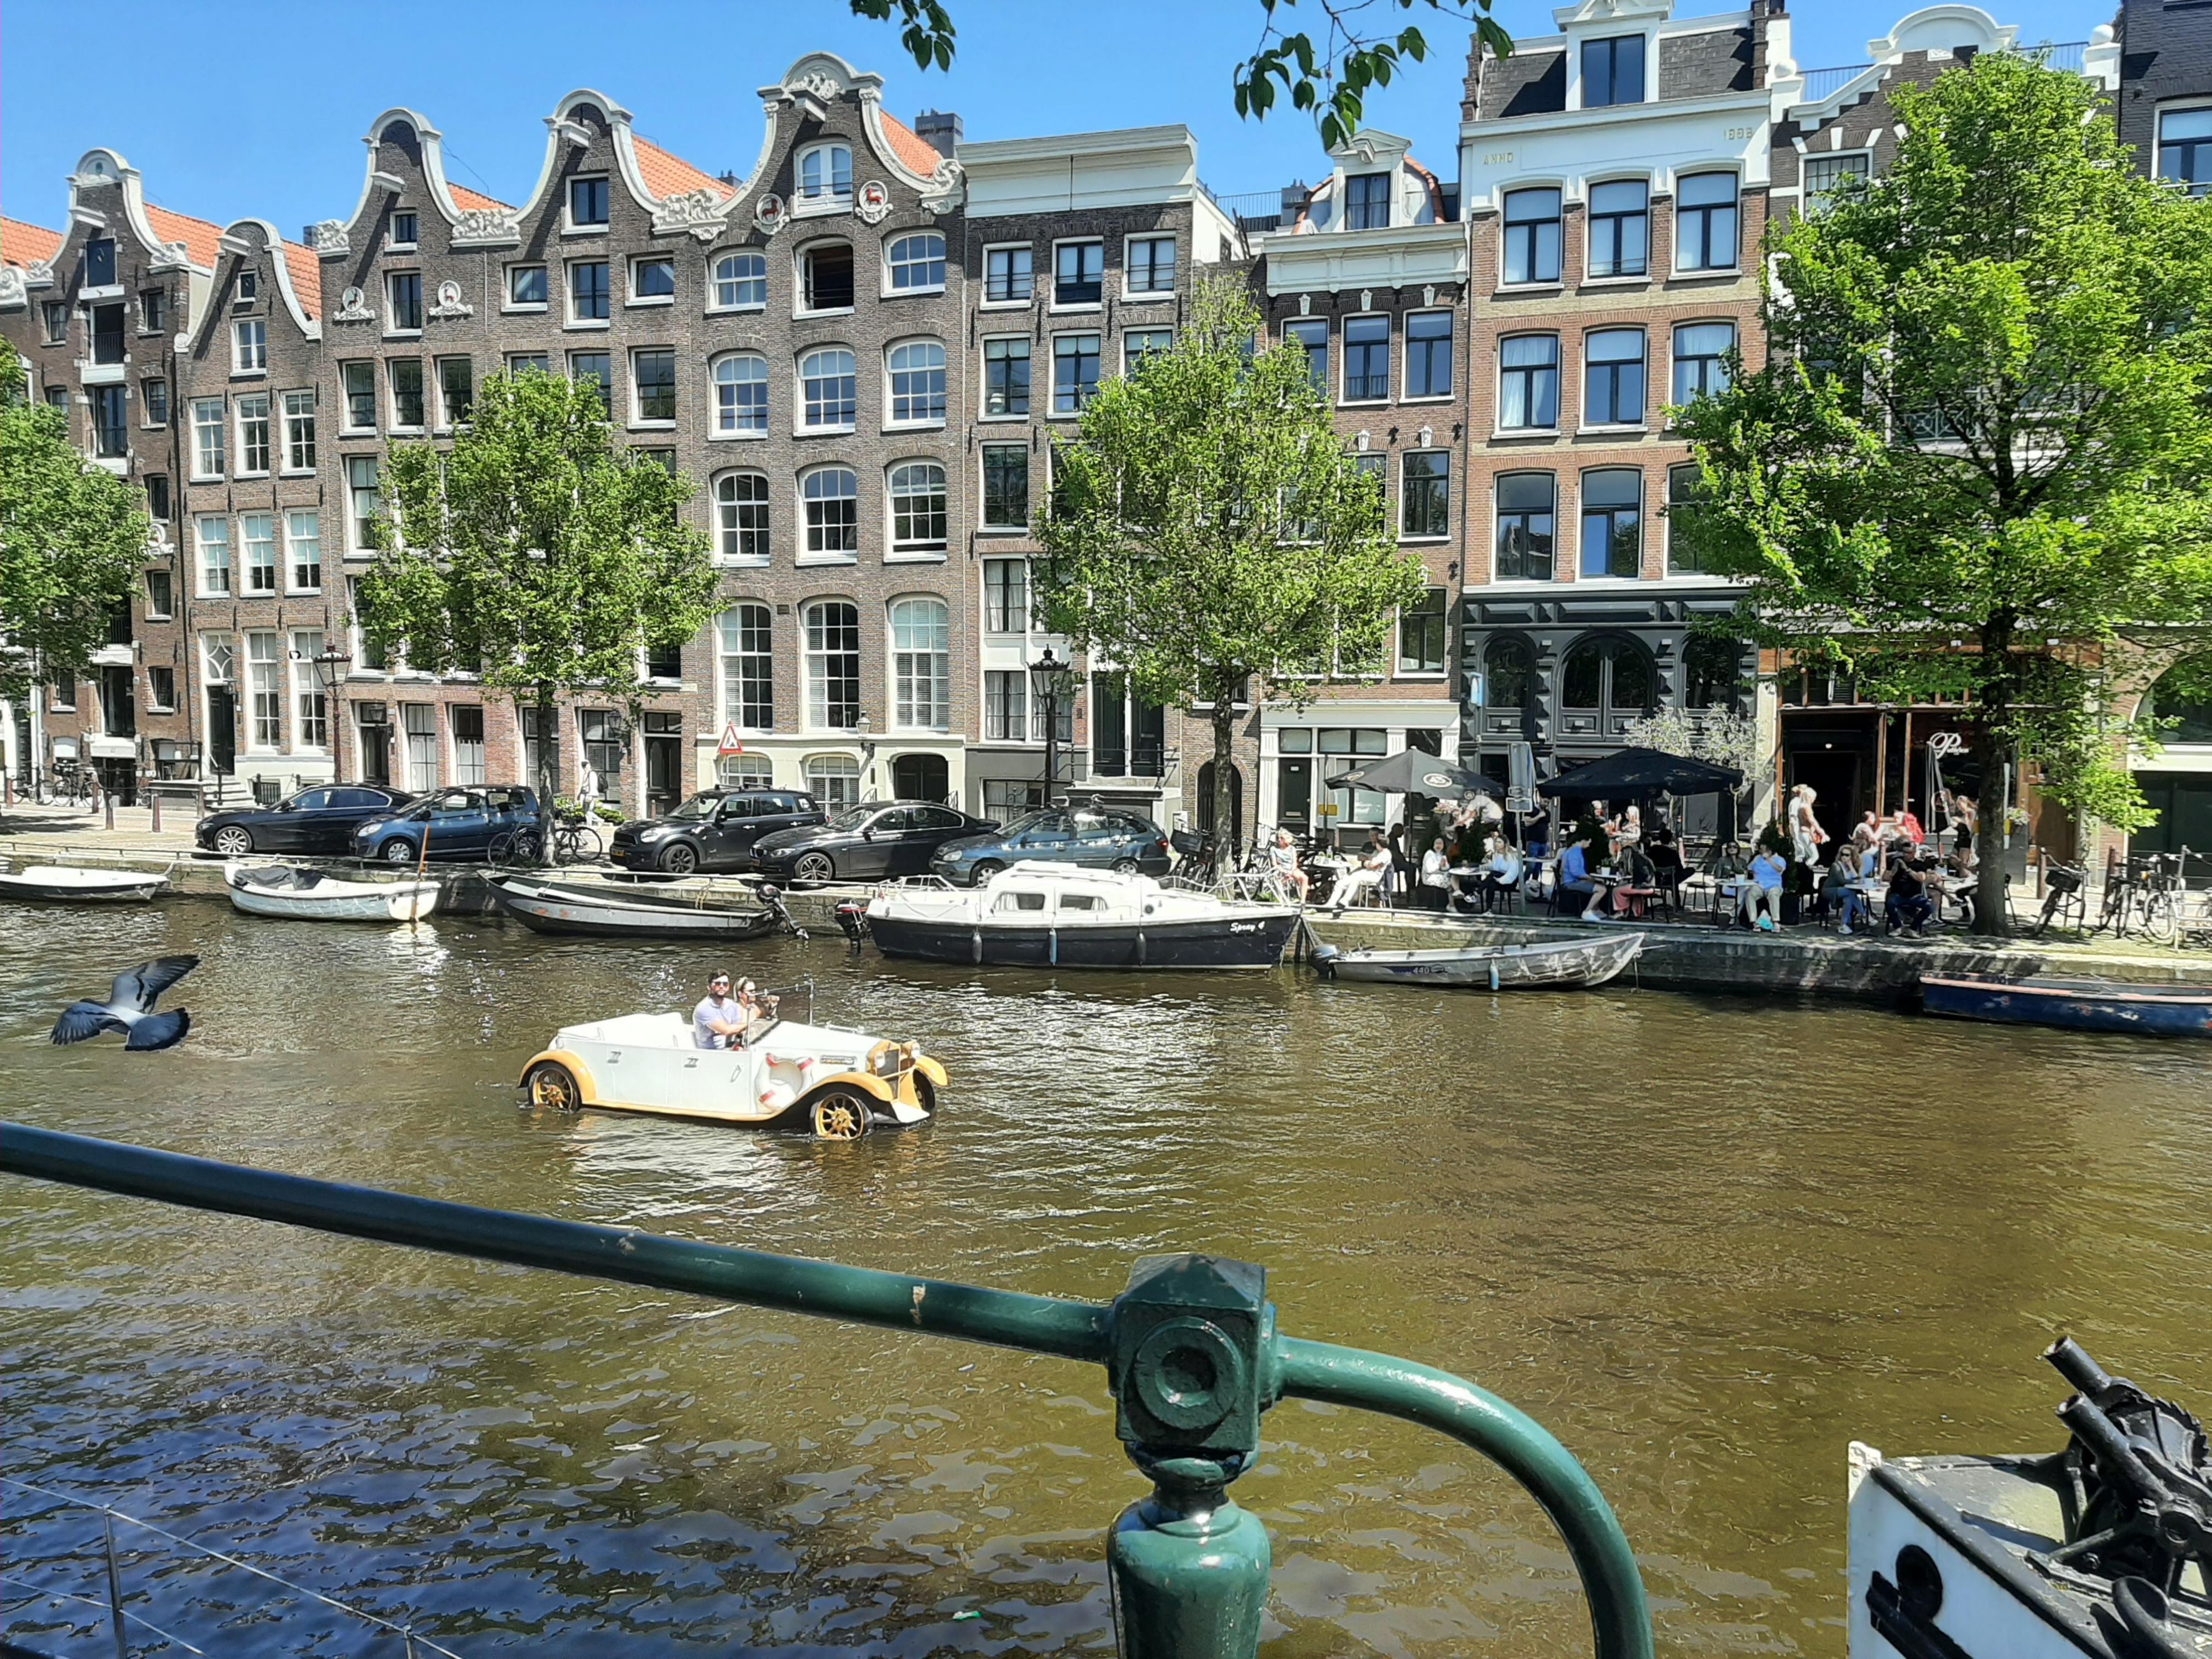 Summer in Amsterdam